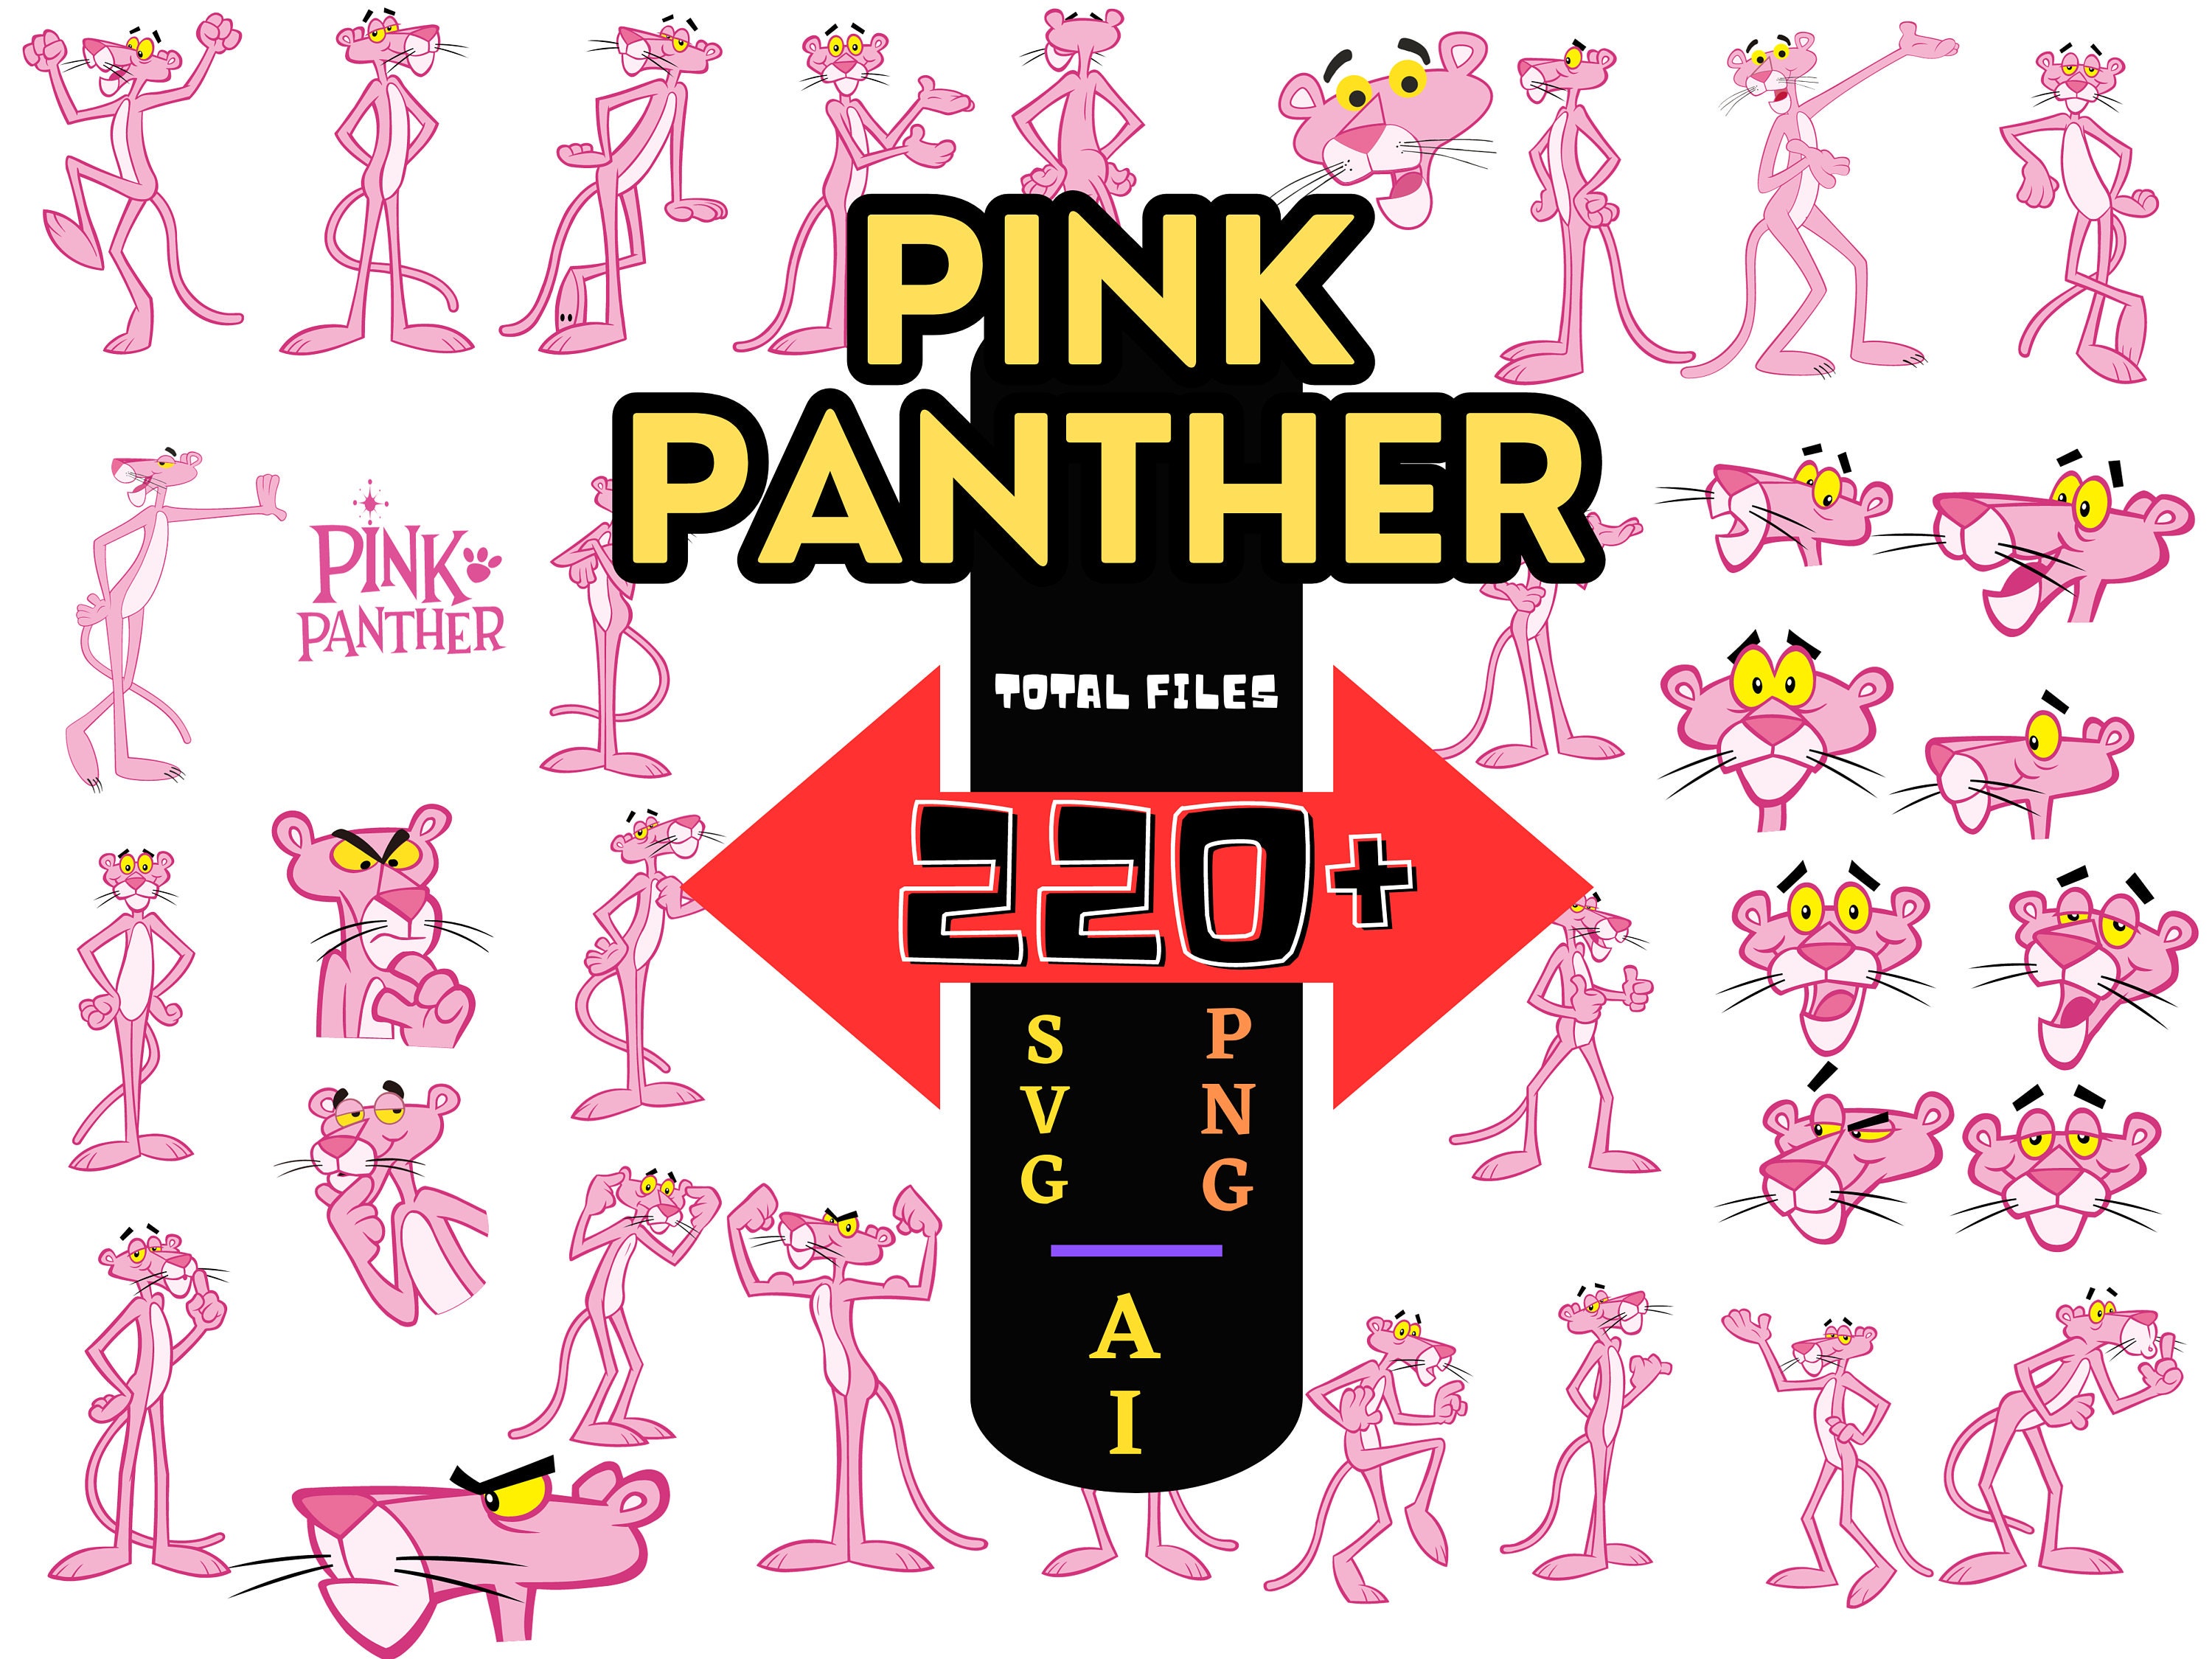 Panther in Tuxedo Pink Wallpaper - Pink Panther Wallpaper iPhone